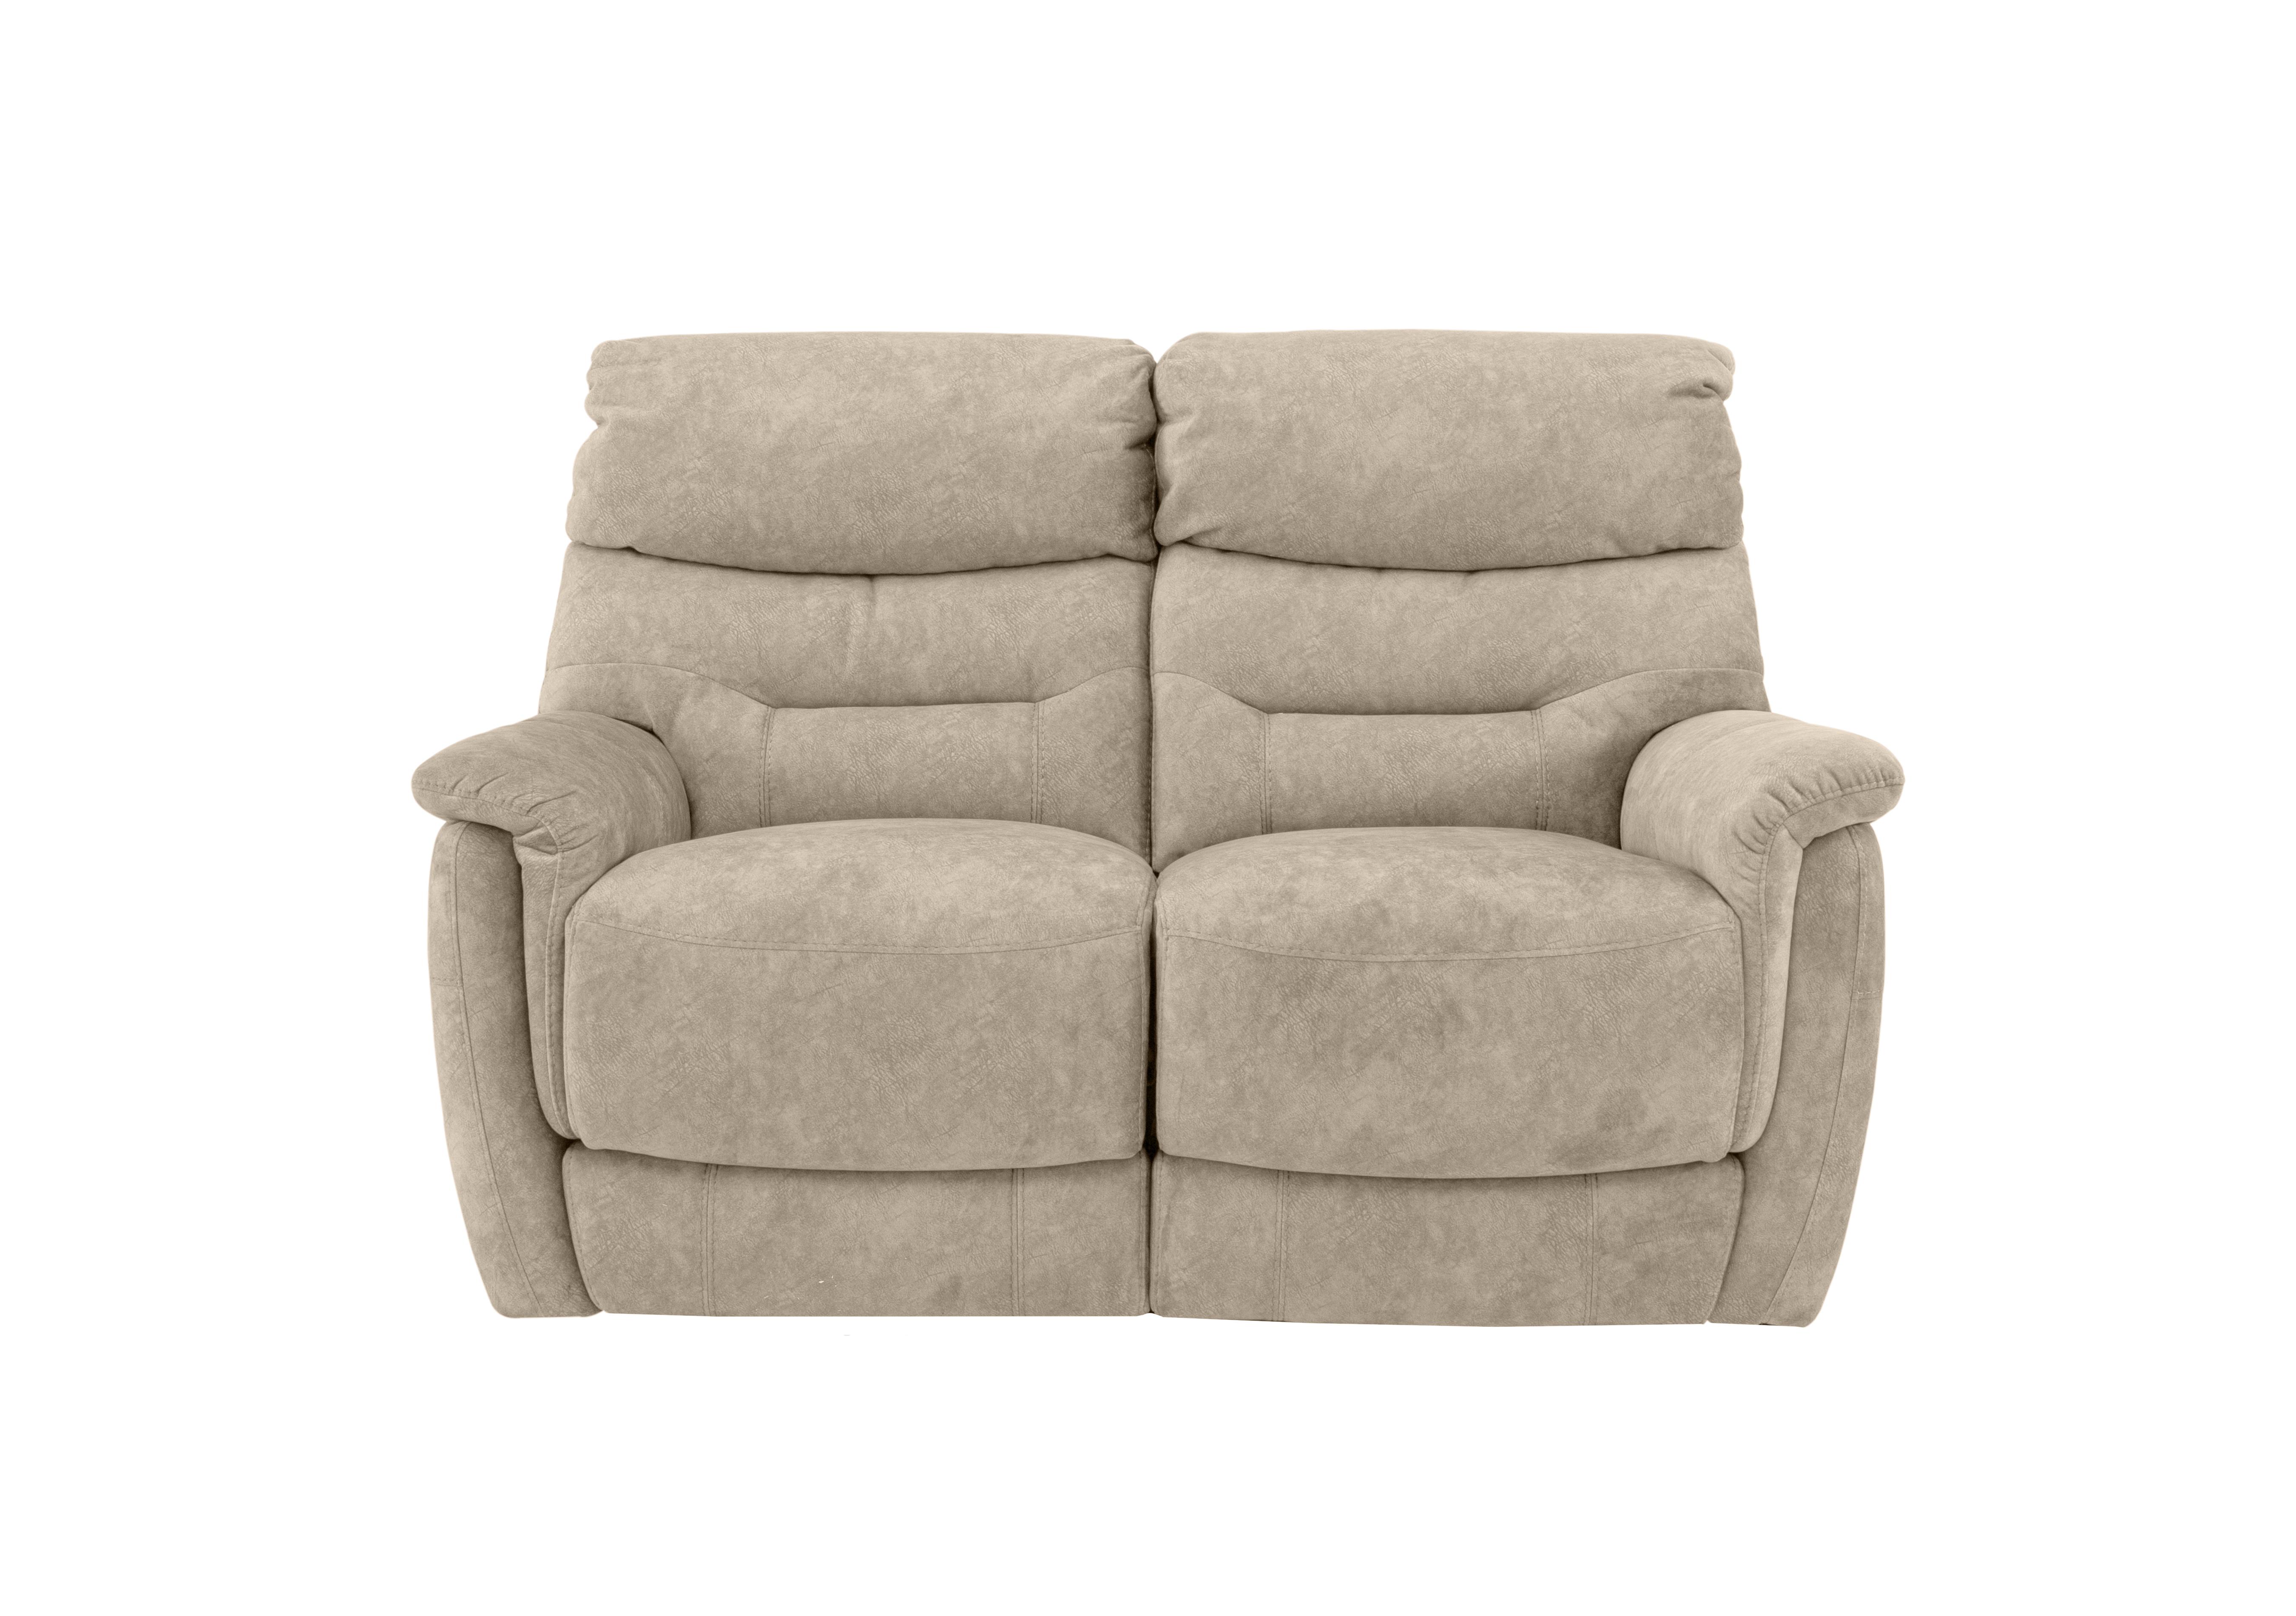 Chicago 2 Seater Fabric Sofa in Bfa-Bnn-R26 Cream on Furniture Village